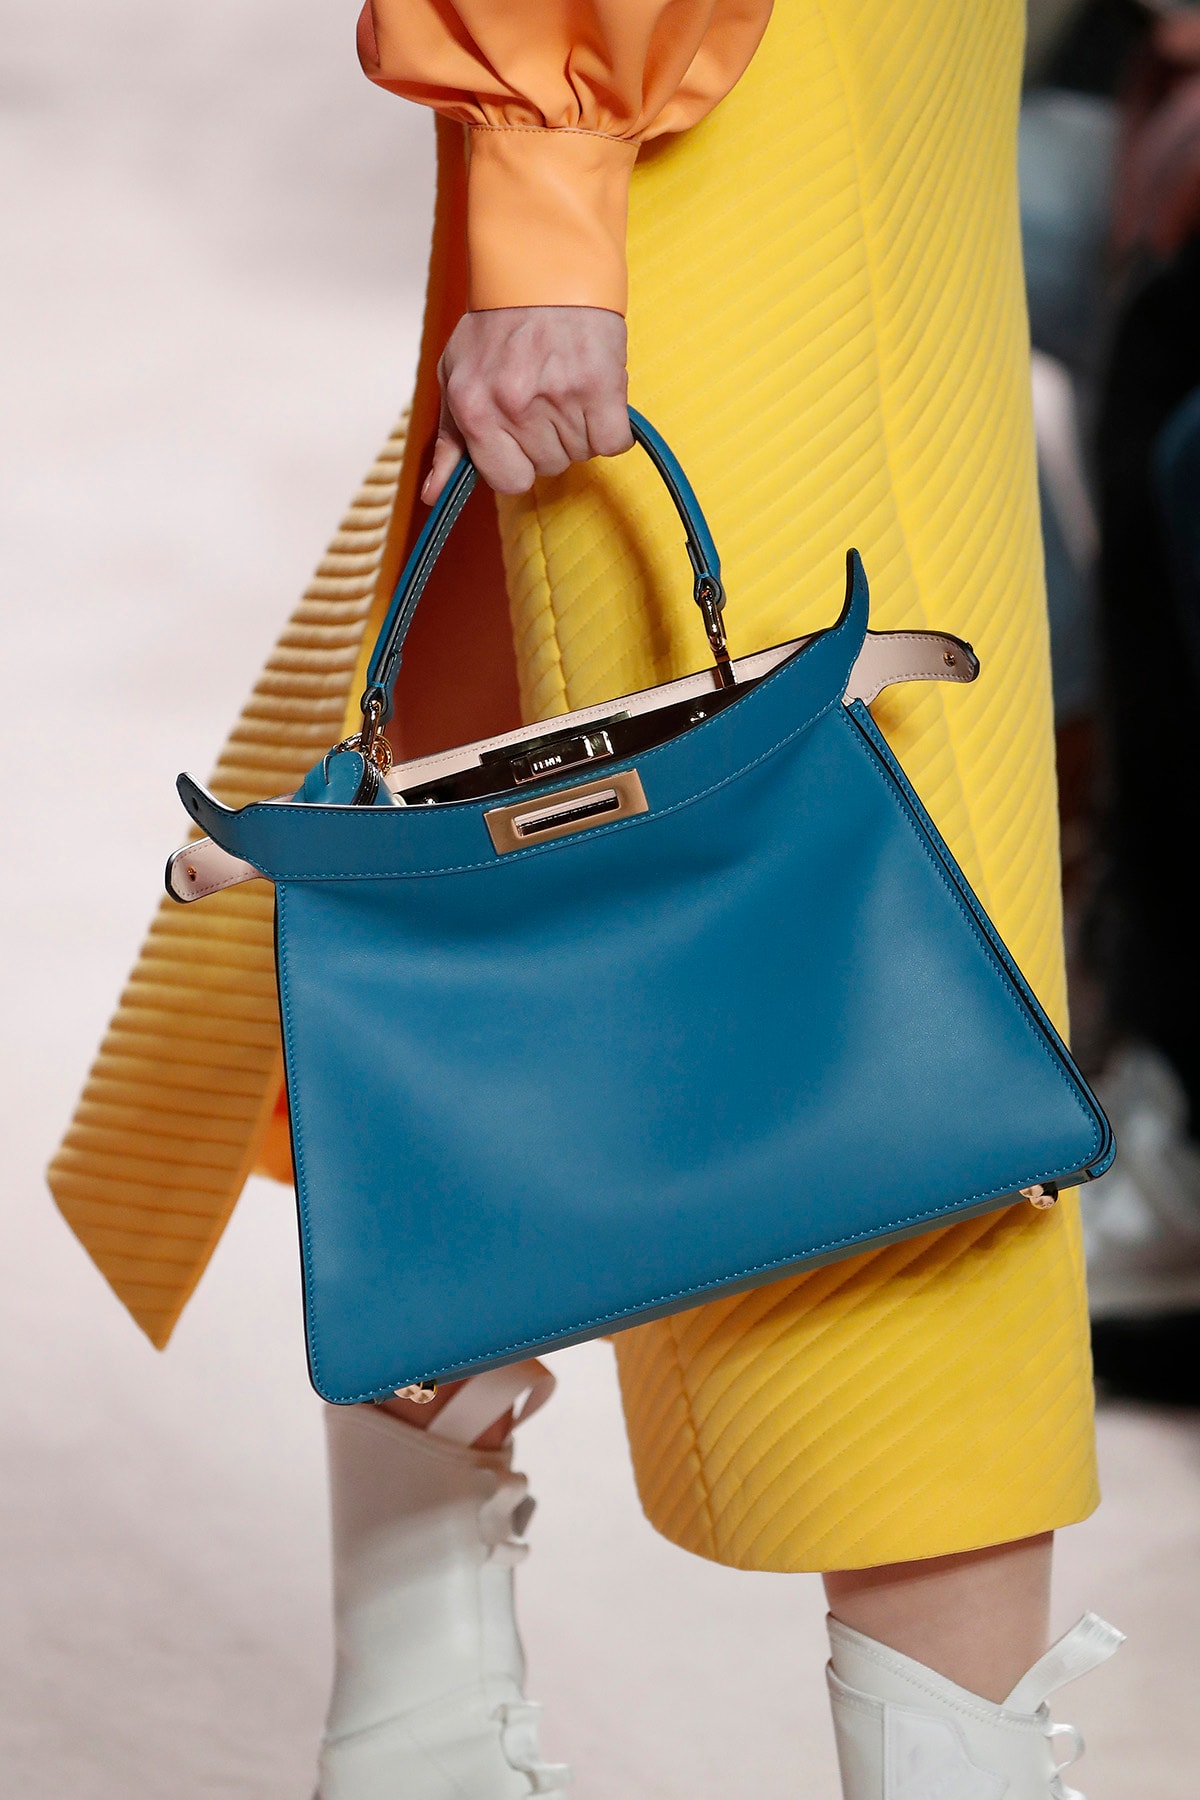 Fendi Fall/Winter 2020 Collection Bags Accessories Peekaboo Blue